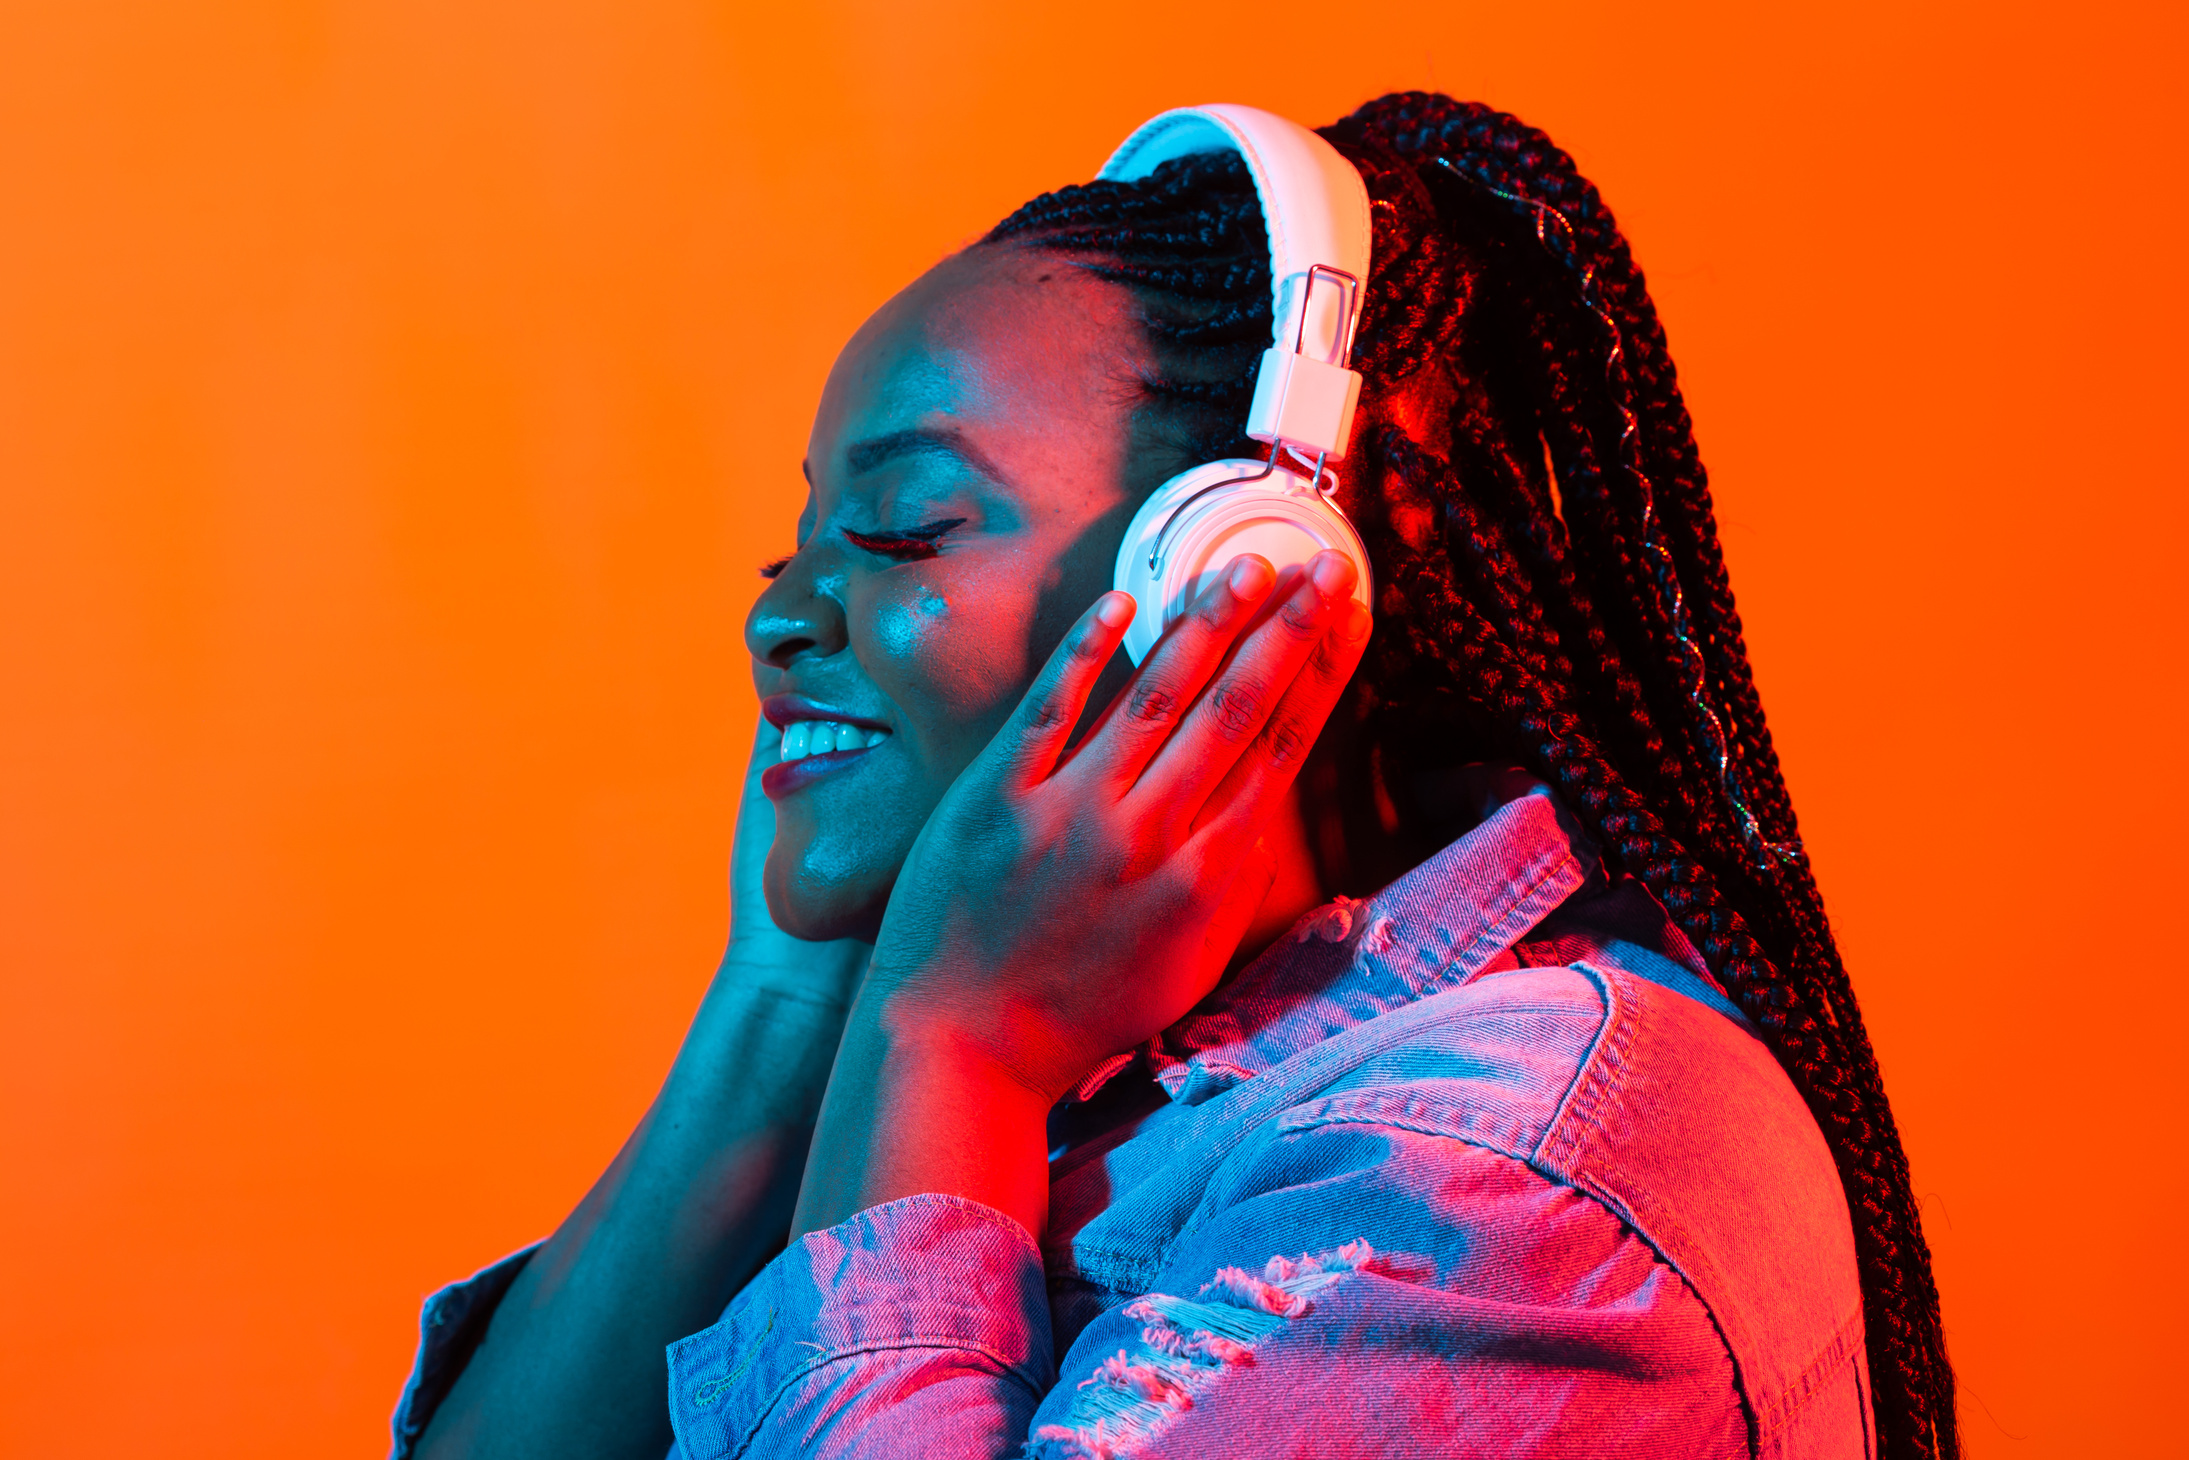 Neon Portrait of Young Black Woman Listen to Music in Headphones.